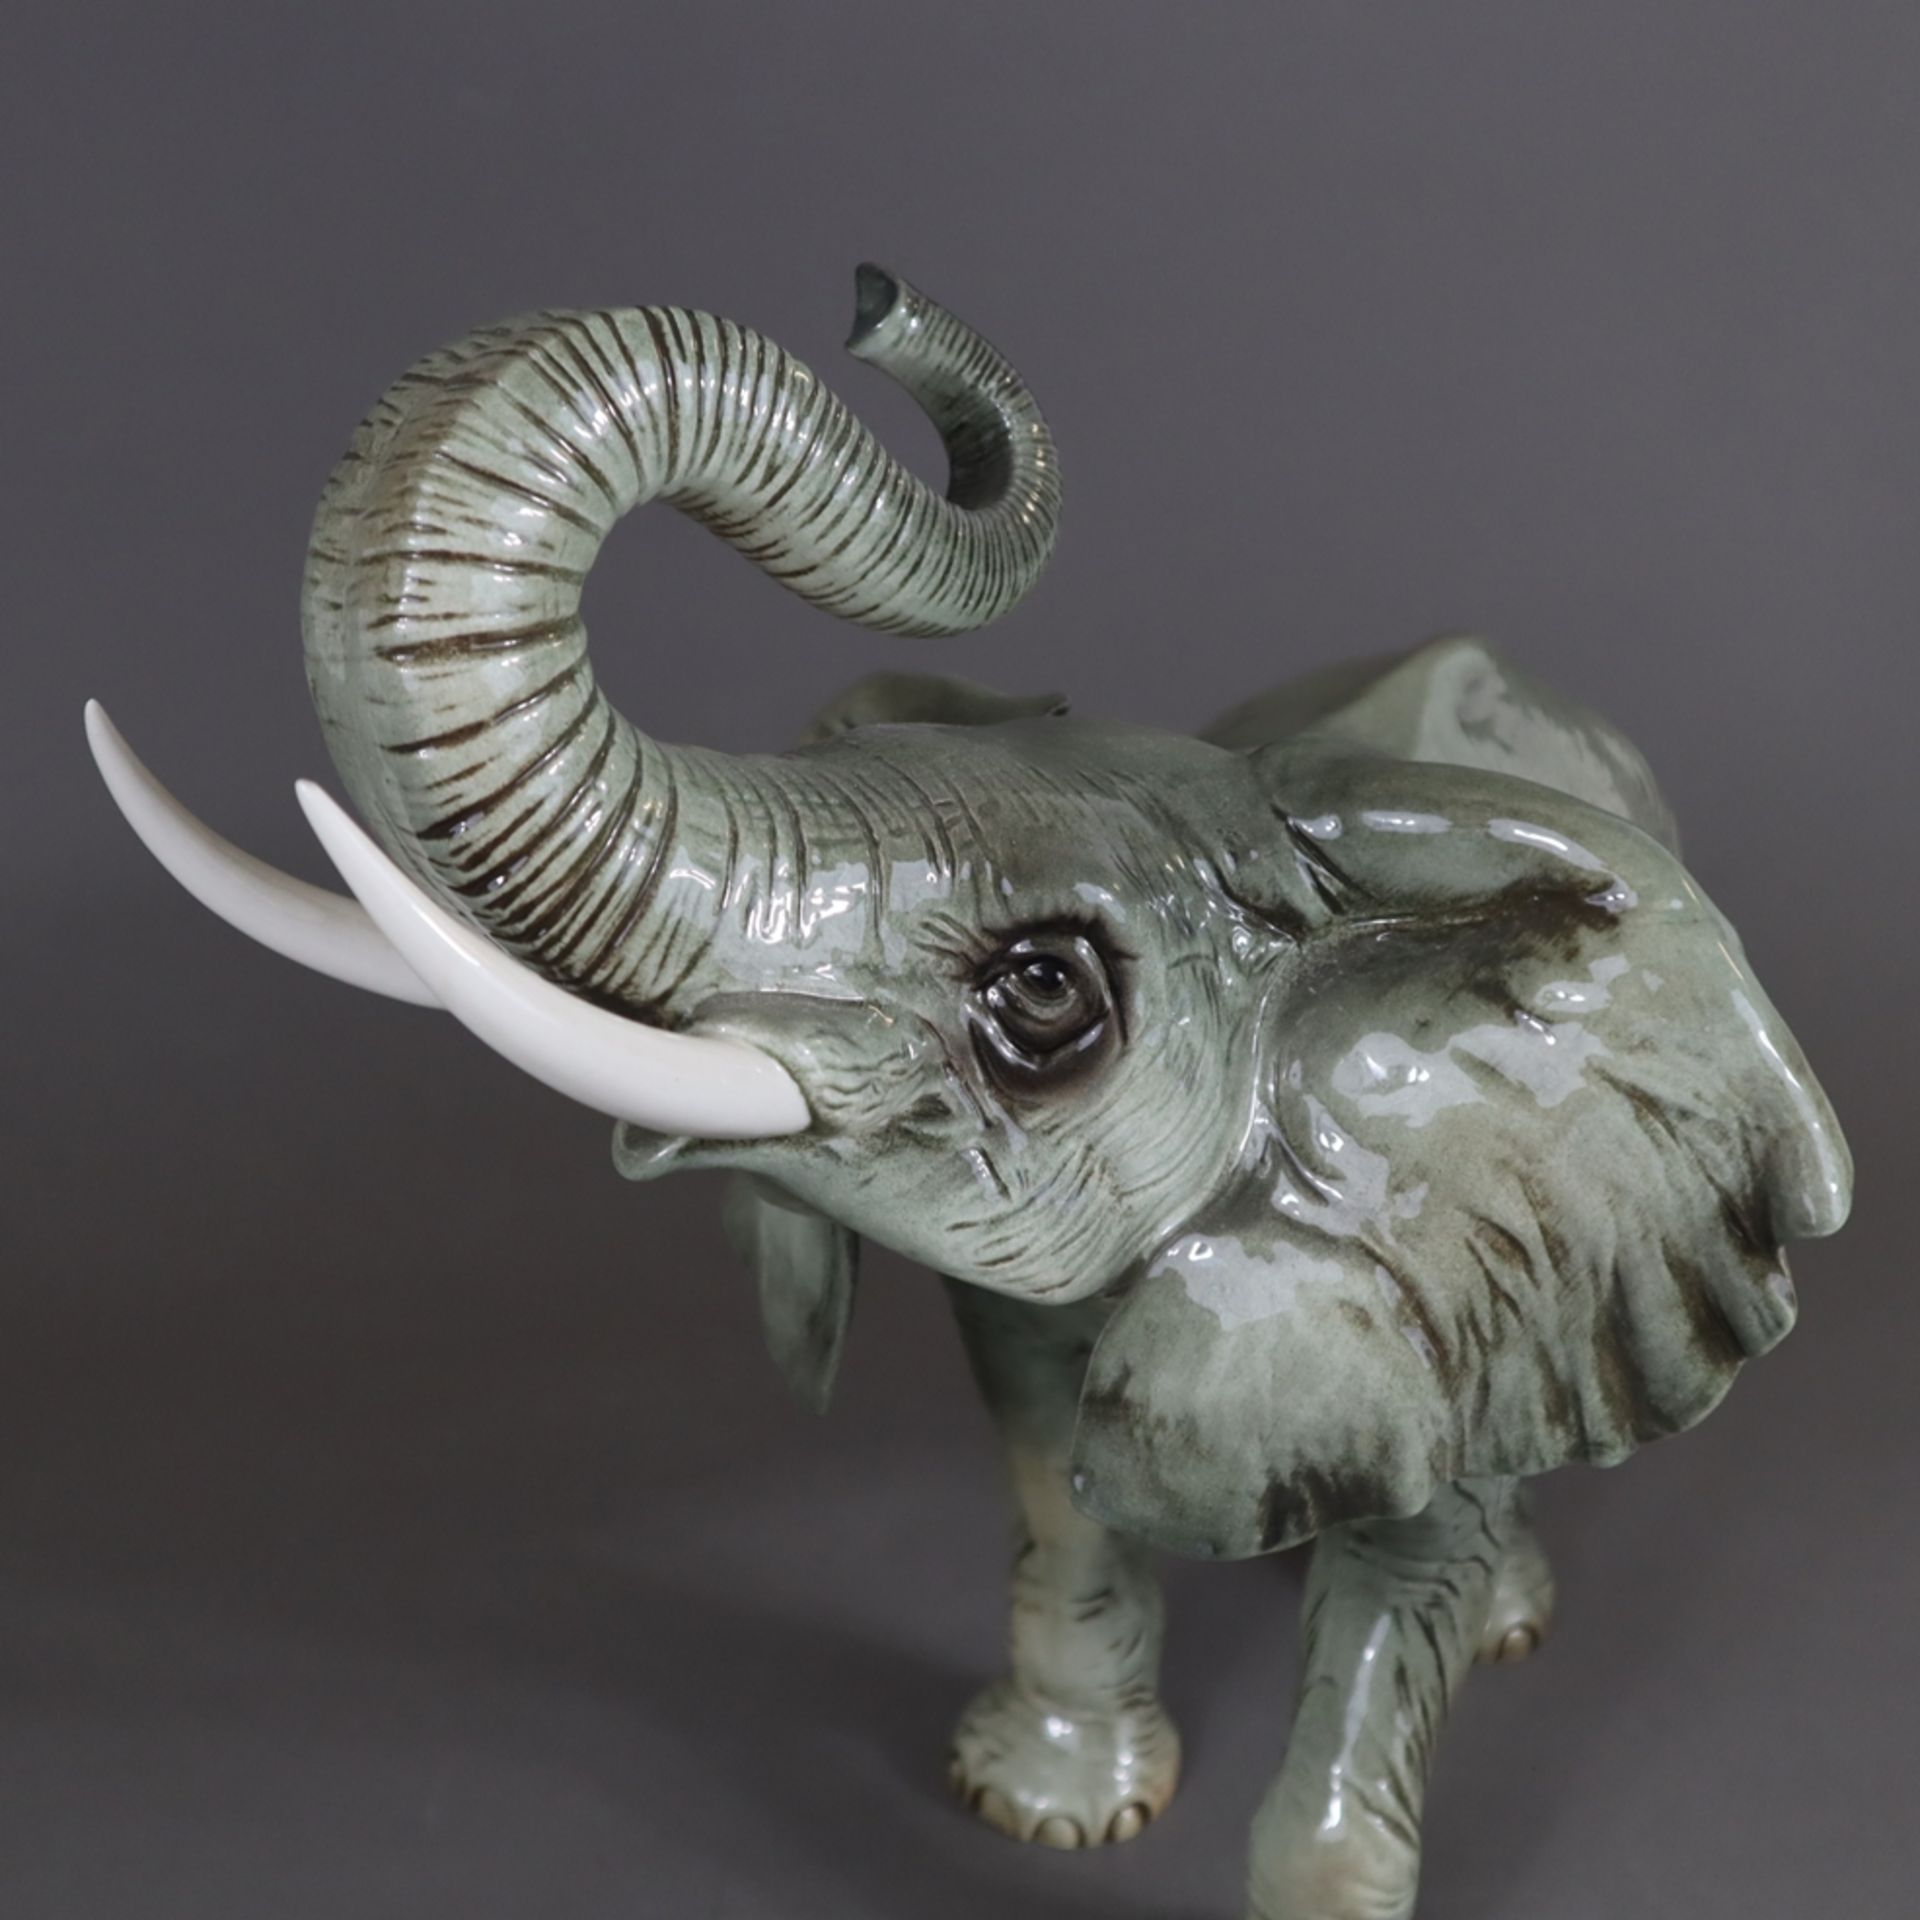 Große Tierfigur "Afrikanischer Elefant" - Goebel, aus der Figurenserie "Serengeti", Porzellan, natu - Image 4 of 8